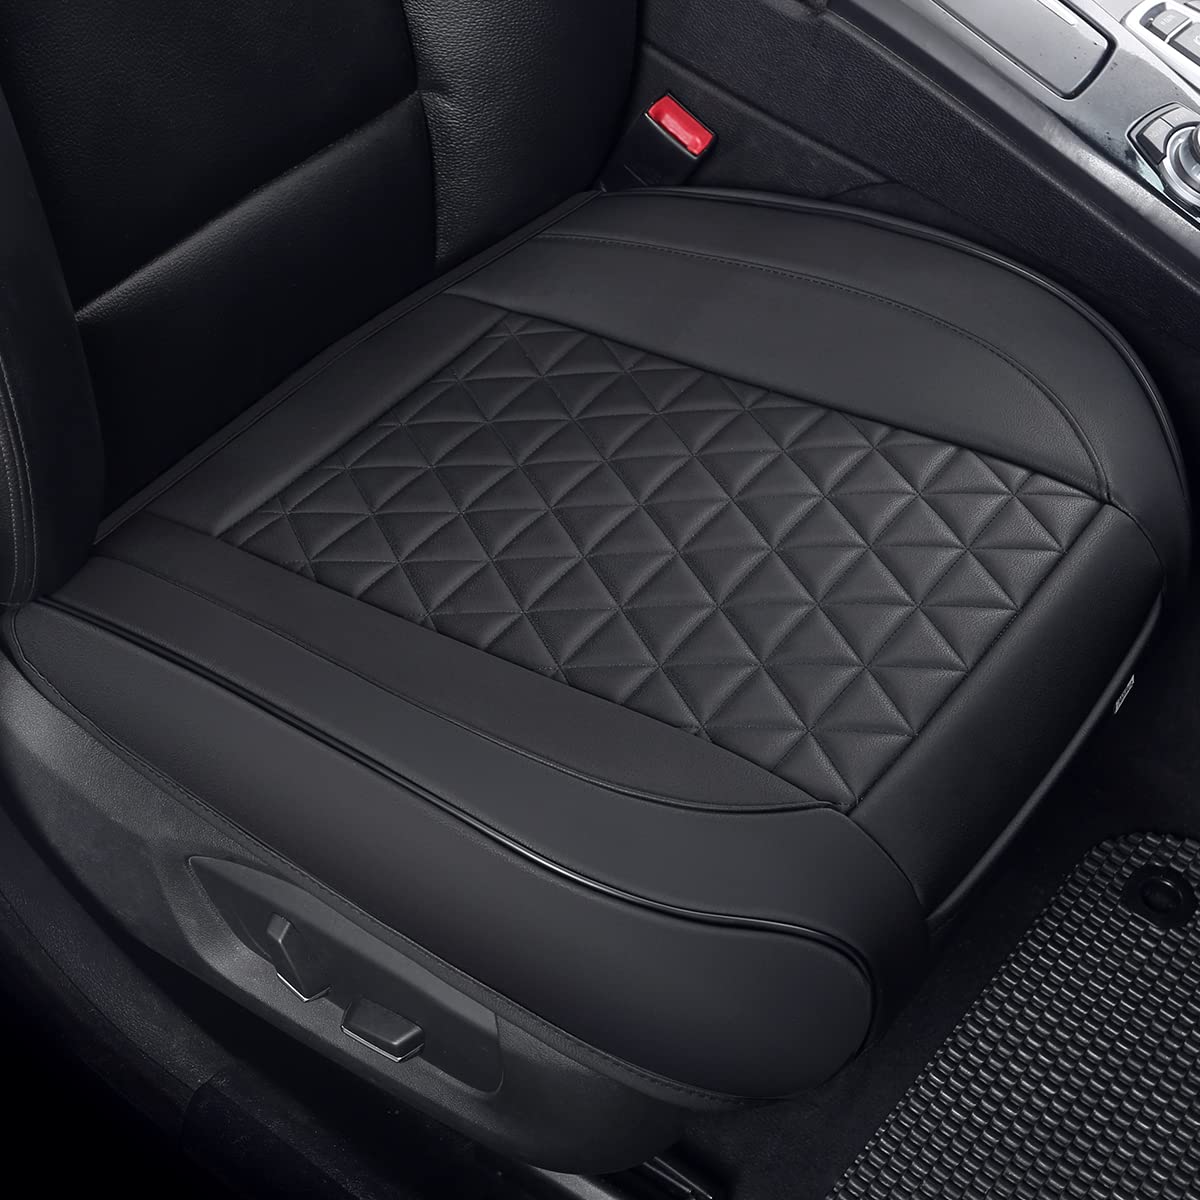 Mercedes Vito Black Leather Seats With White Stitching | Trim Technik